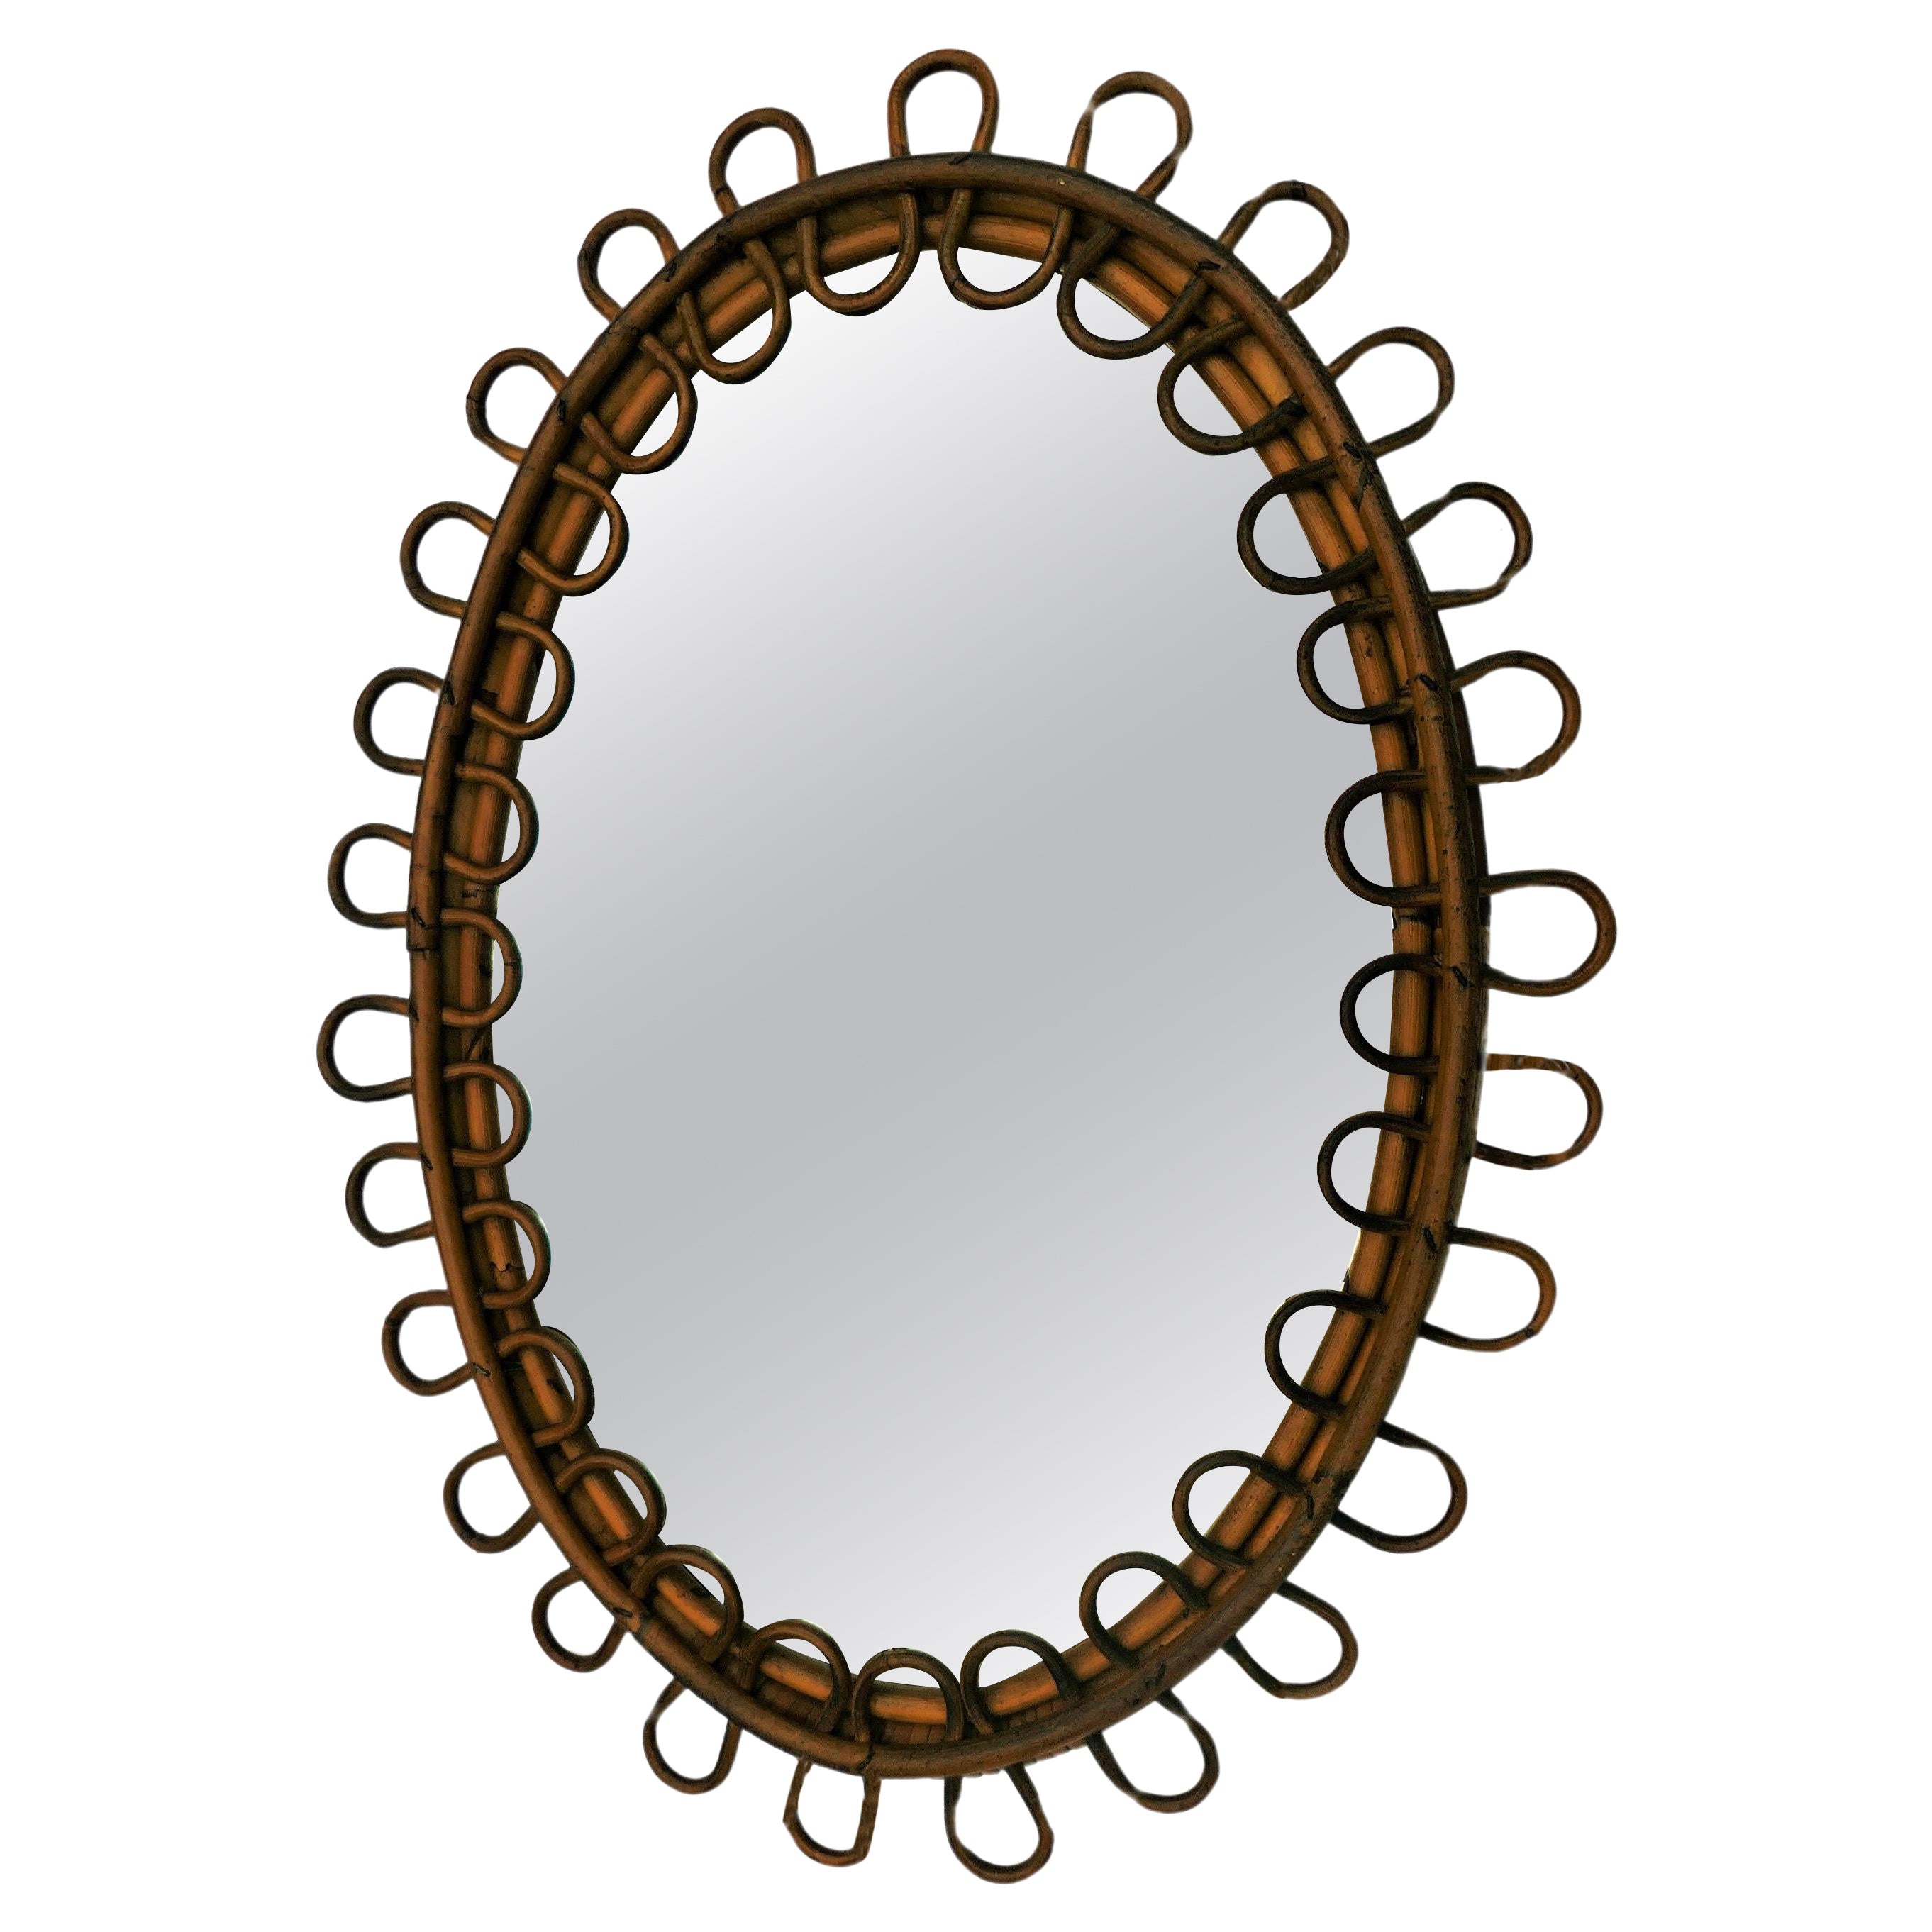 French or Italian rattan wicker mirror For Sale